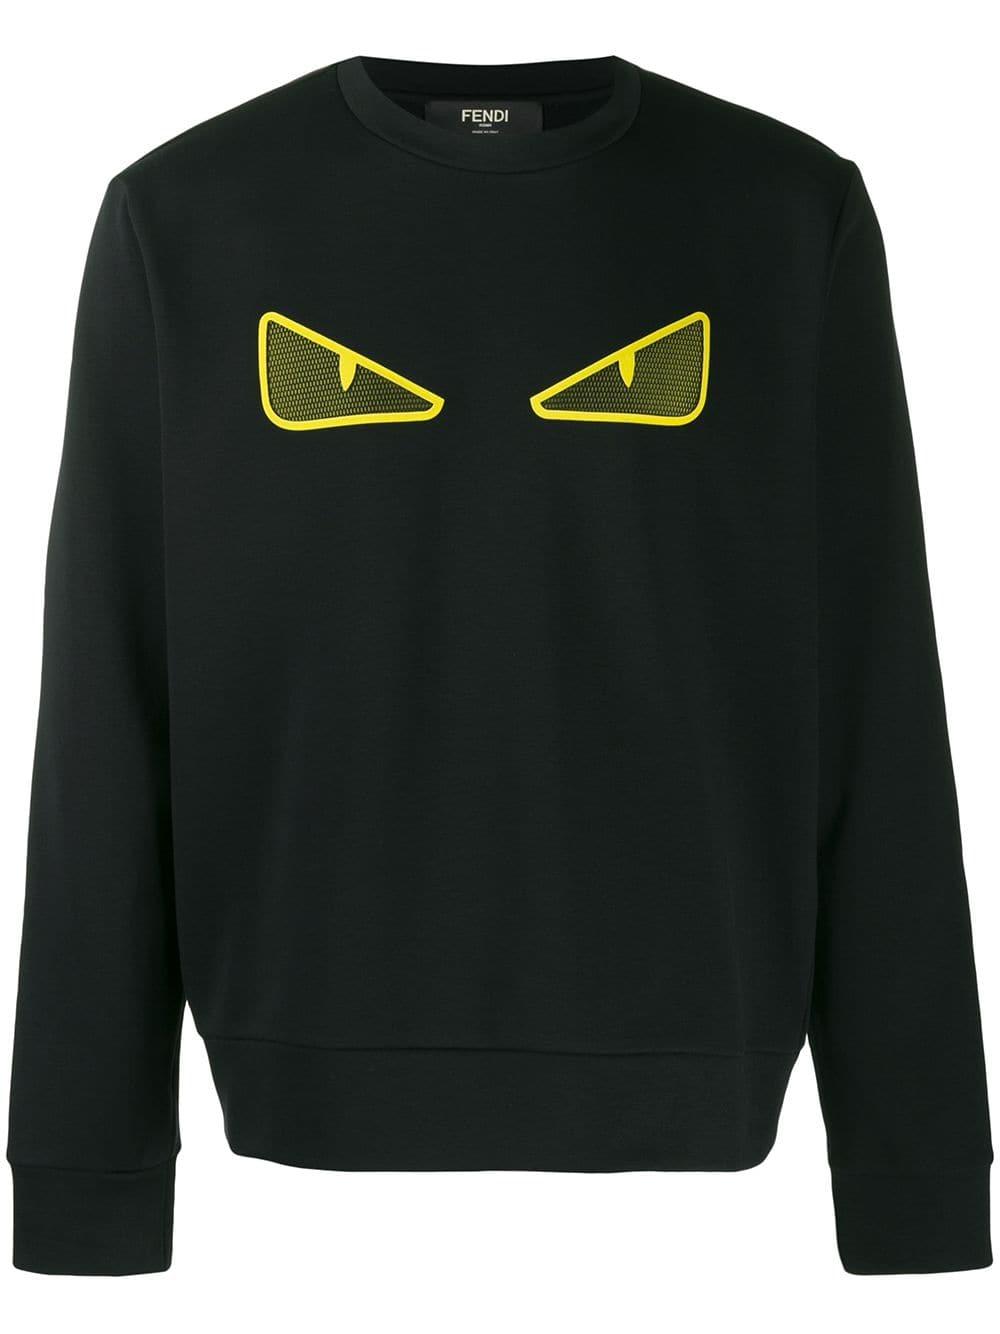 Fendi Cotton Bag Bugs Eye Motif Sweater in Black for Men - Lyst